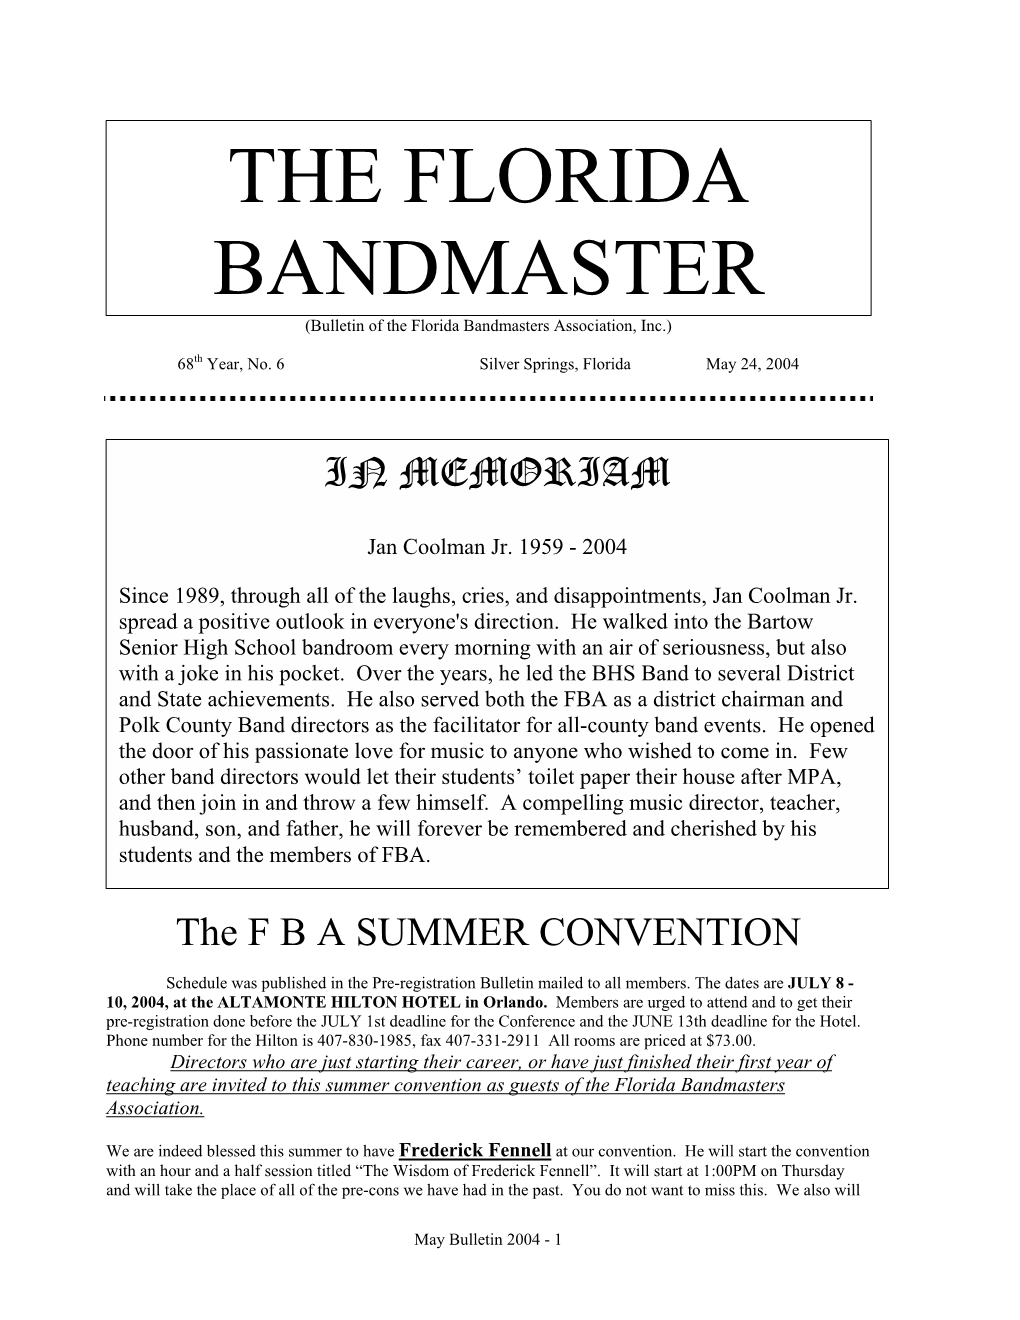 Bulletin of the Florida Bandmasters Association, Inc.